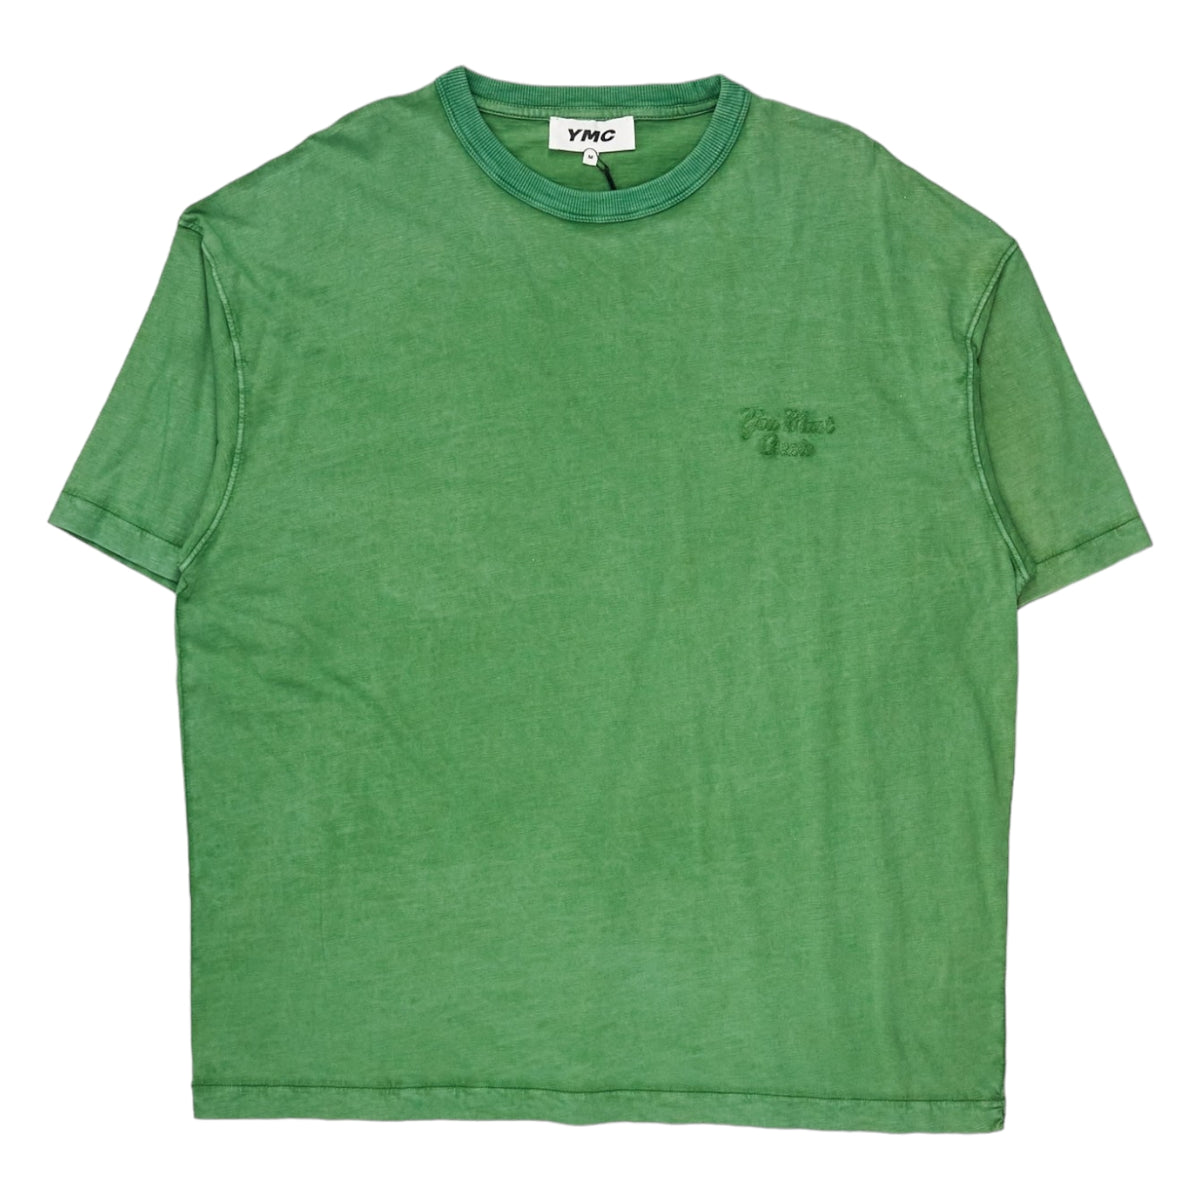 YMC Abundant Green Triple T Shirt